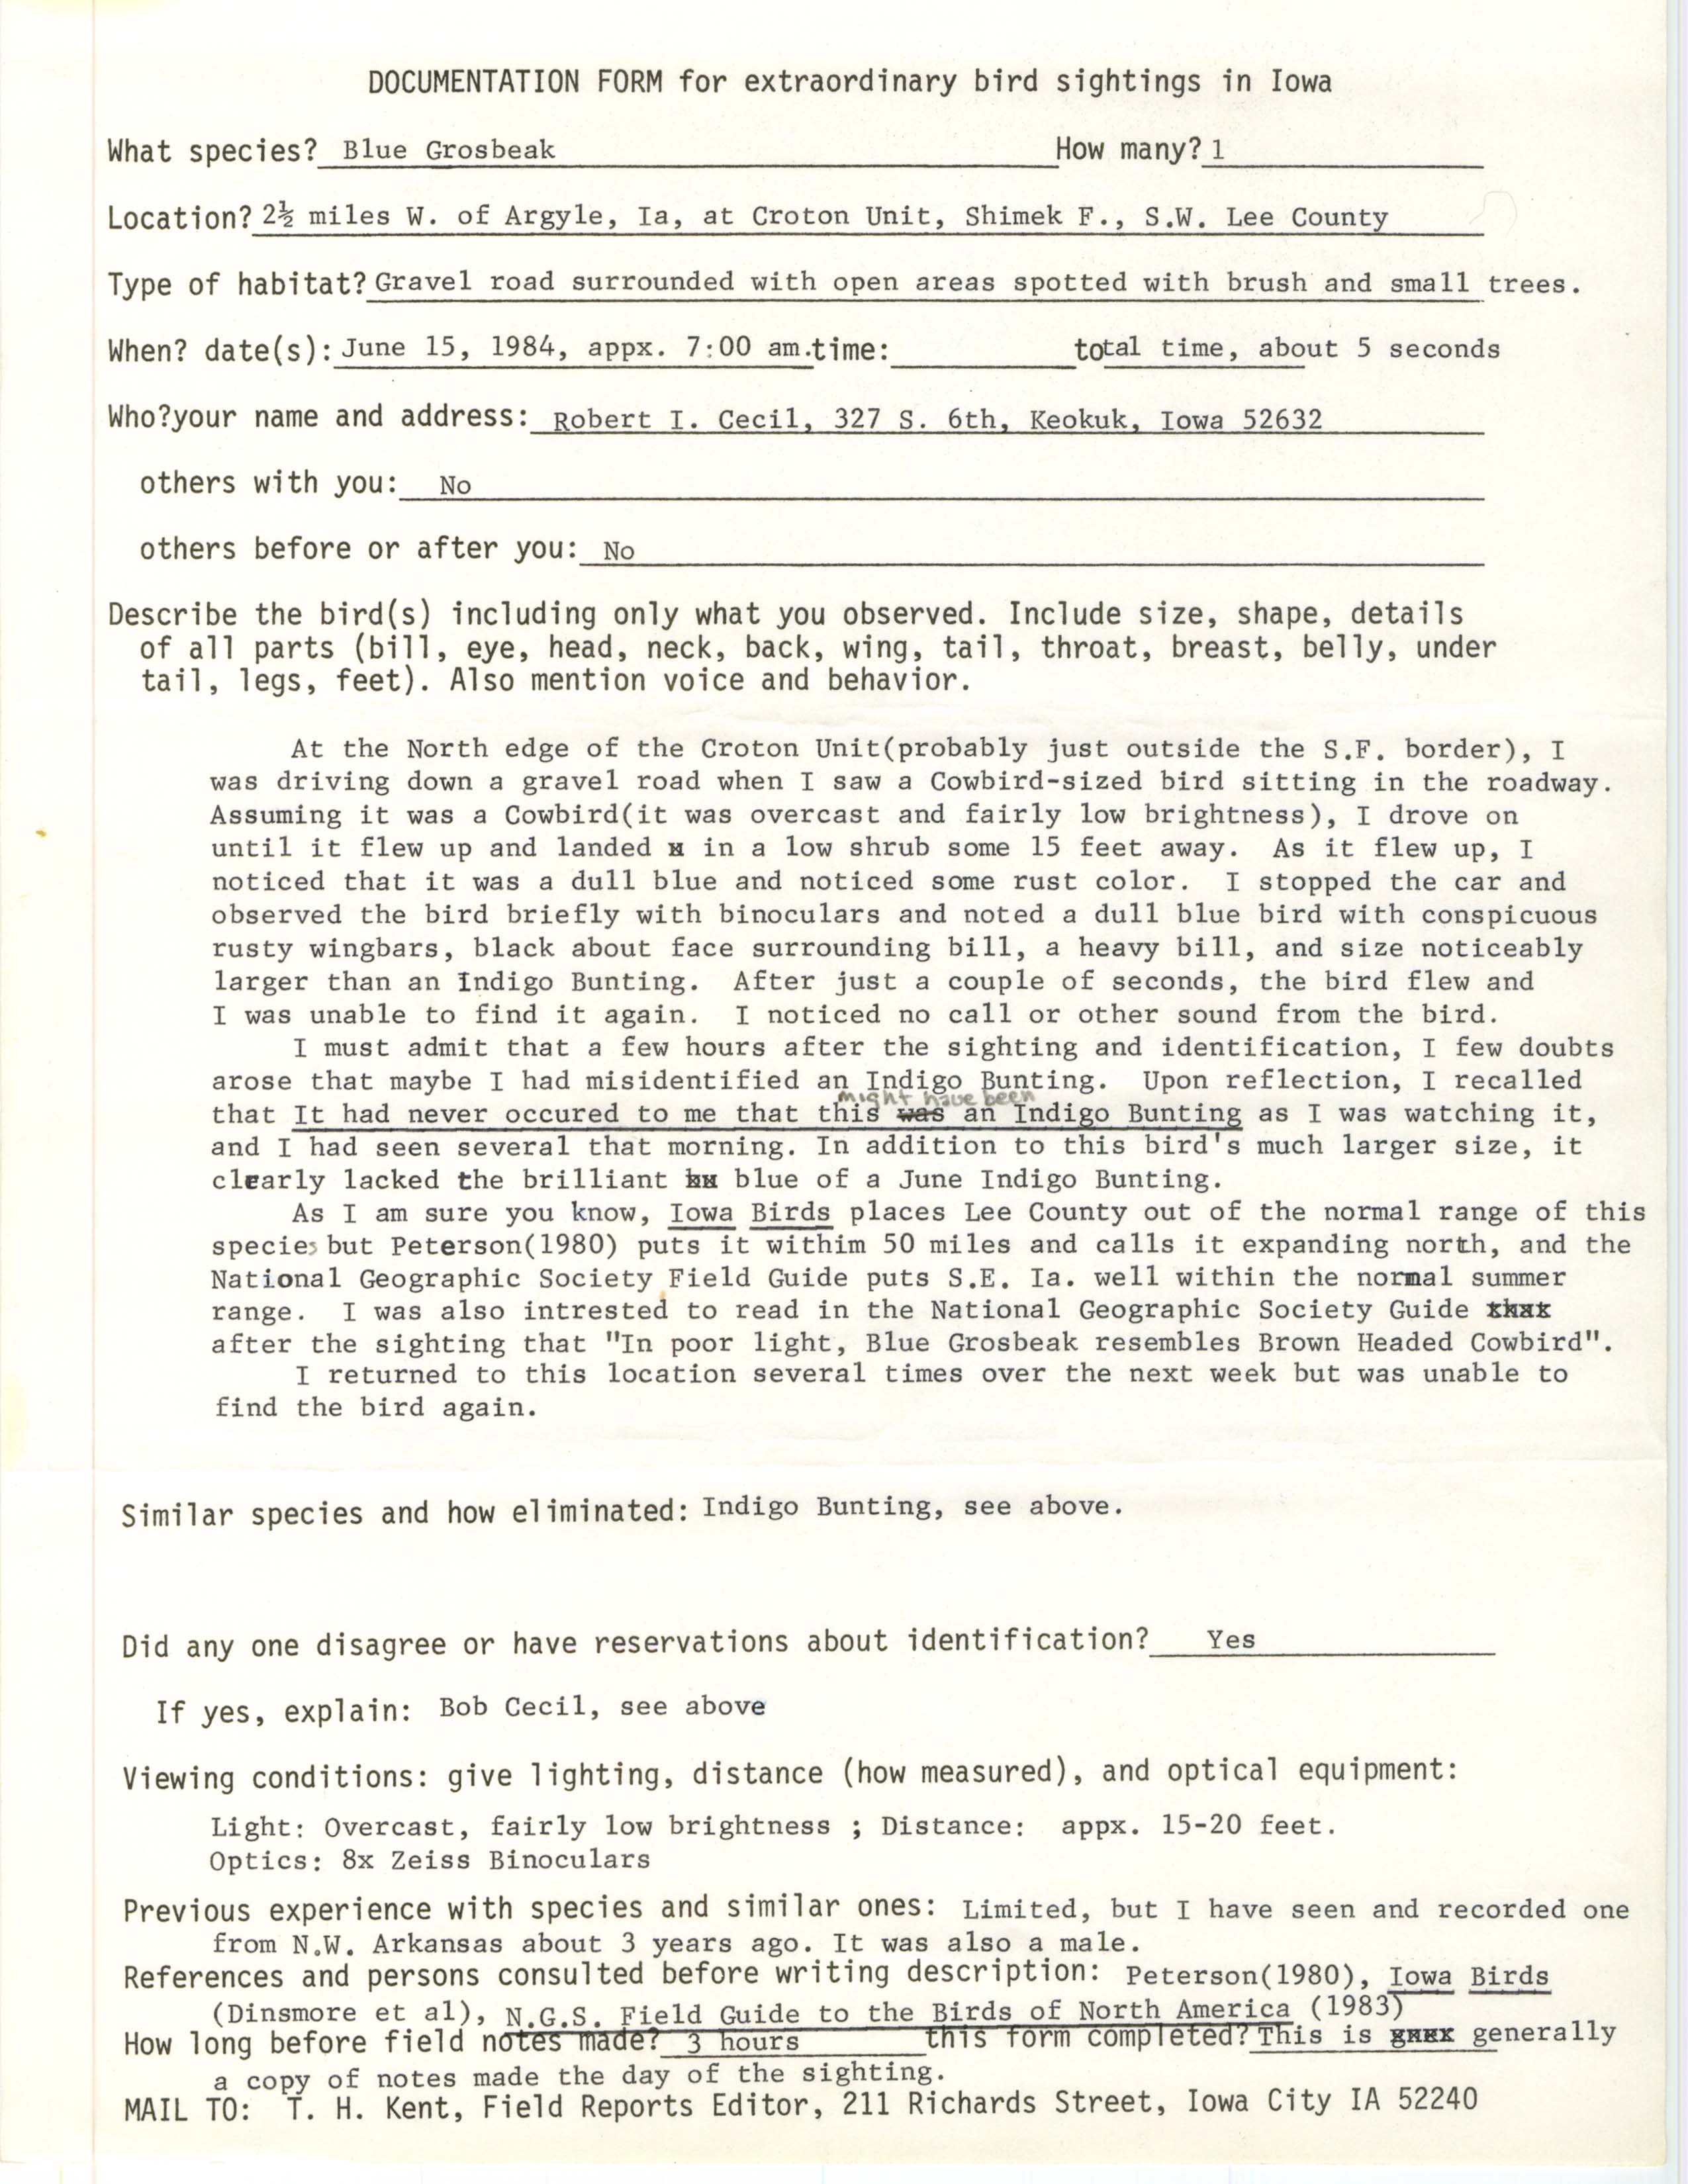 Rare bird documentation form for Blue Grosbeak at the Croton Unit in Shimek Forest, 1984